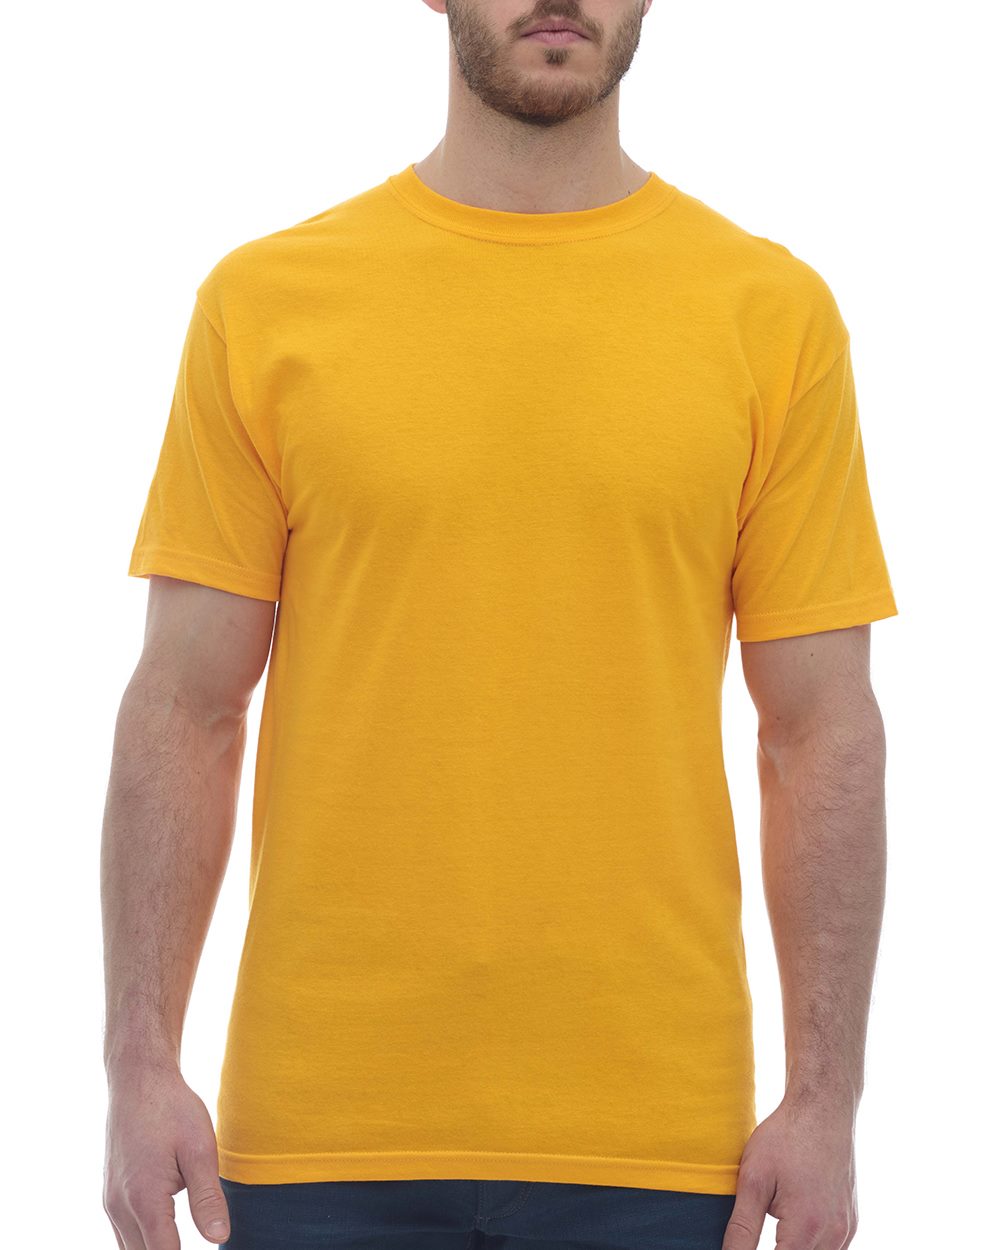 M&O Gold Soft Touch T-Shirt - 4800